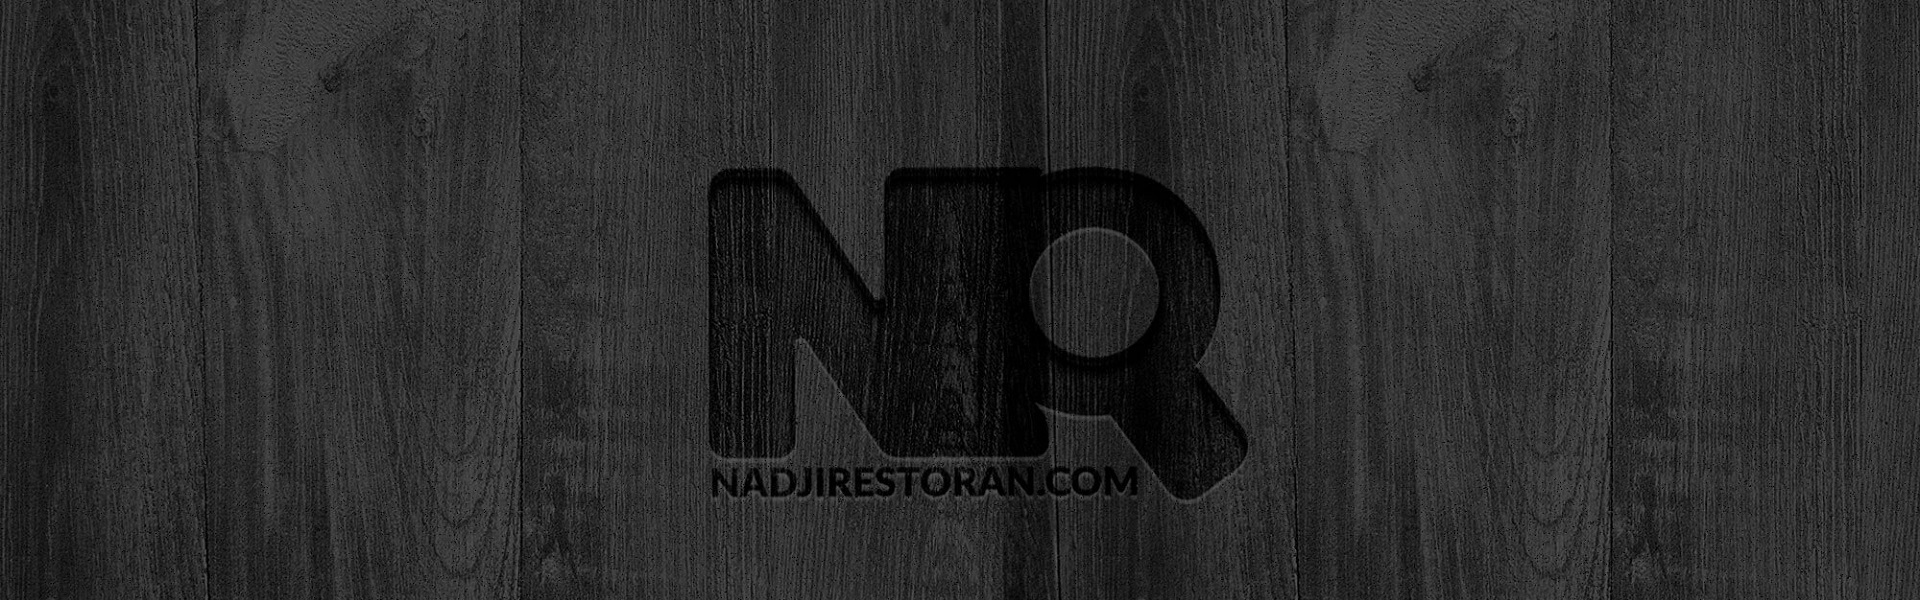 Movers and packers Abu Dhabi |  Nadji restoran